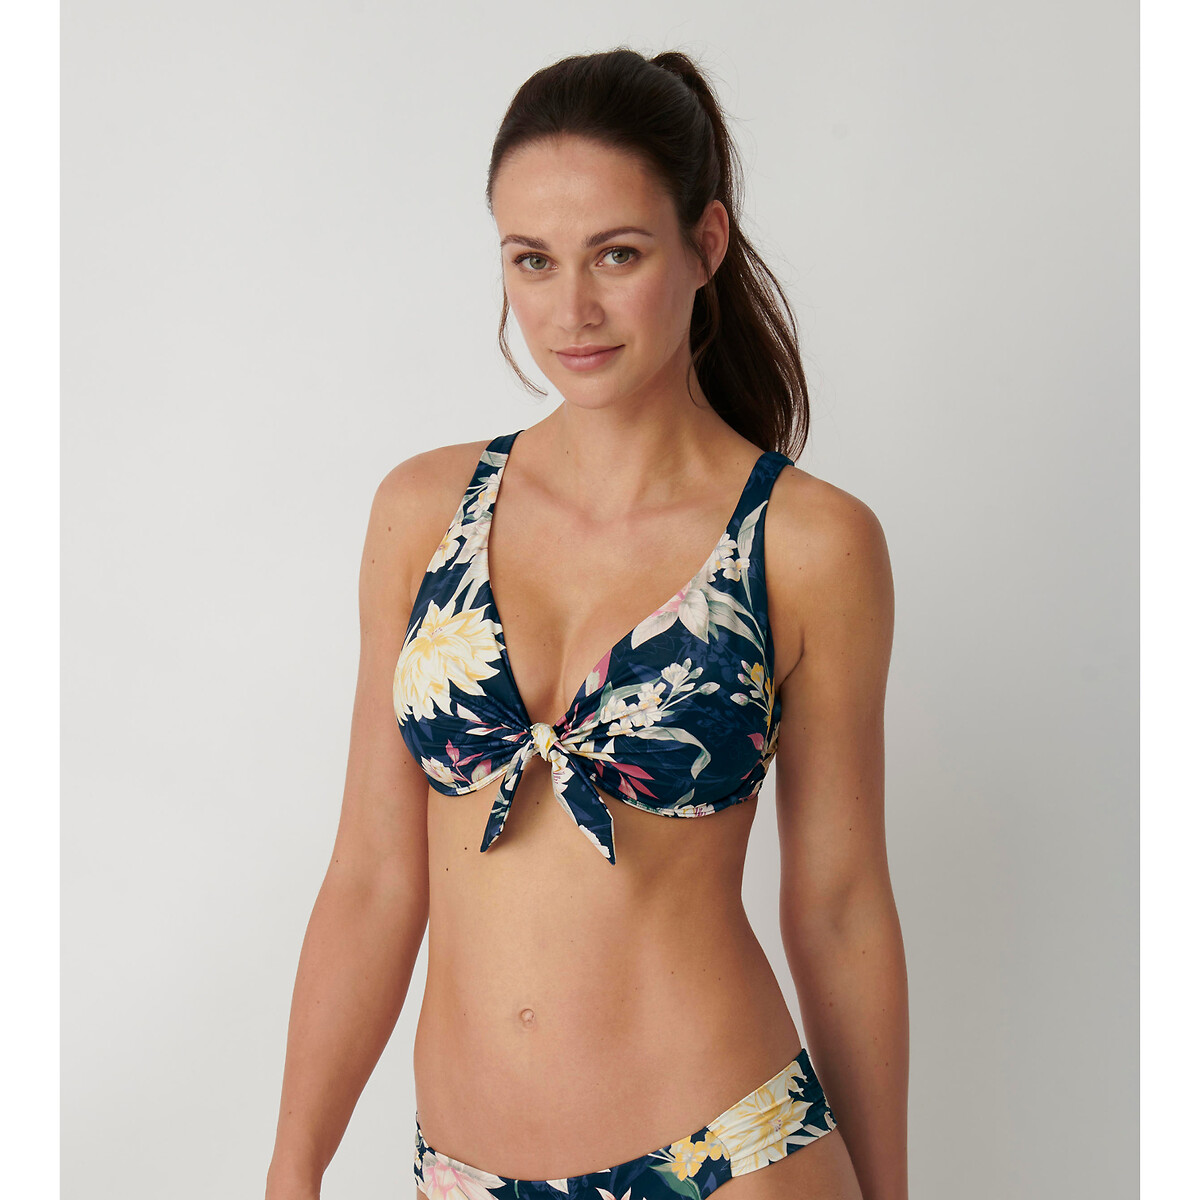 Roxy B Leaf Garden Crop Top Swim Suit - 42nd Street Clothing